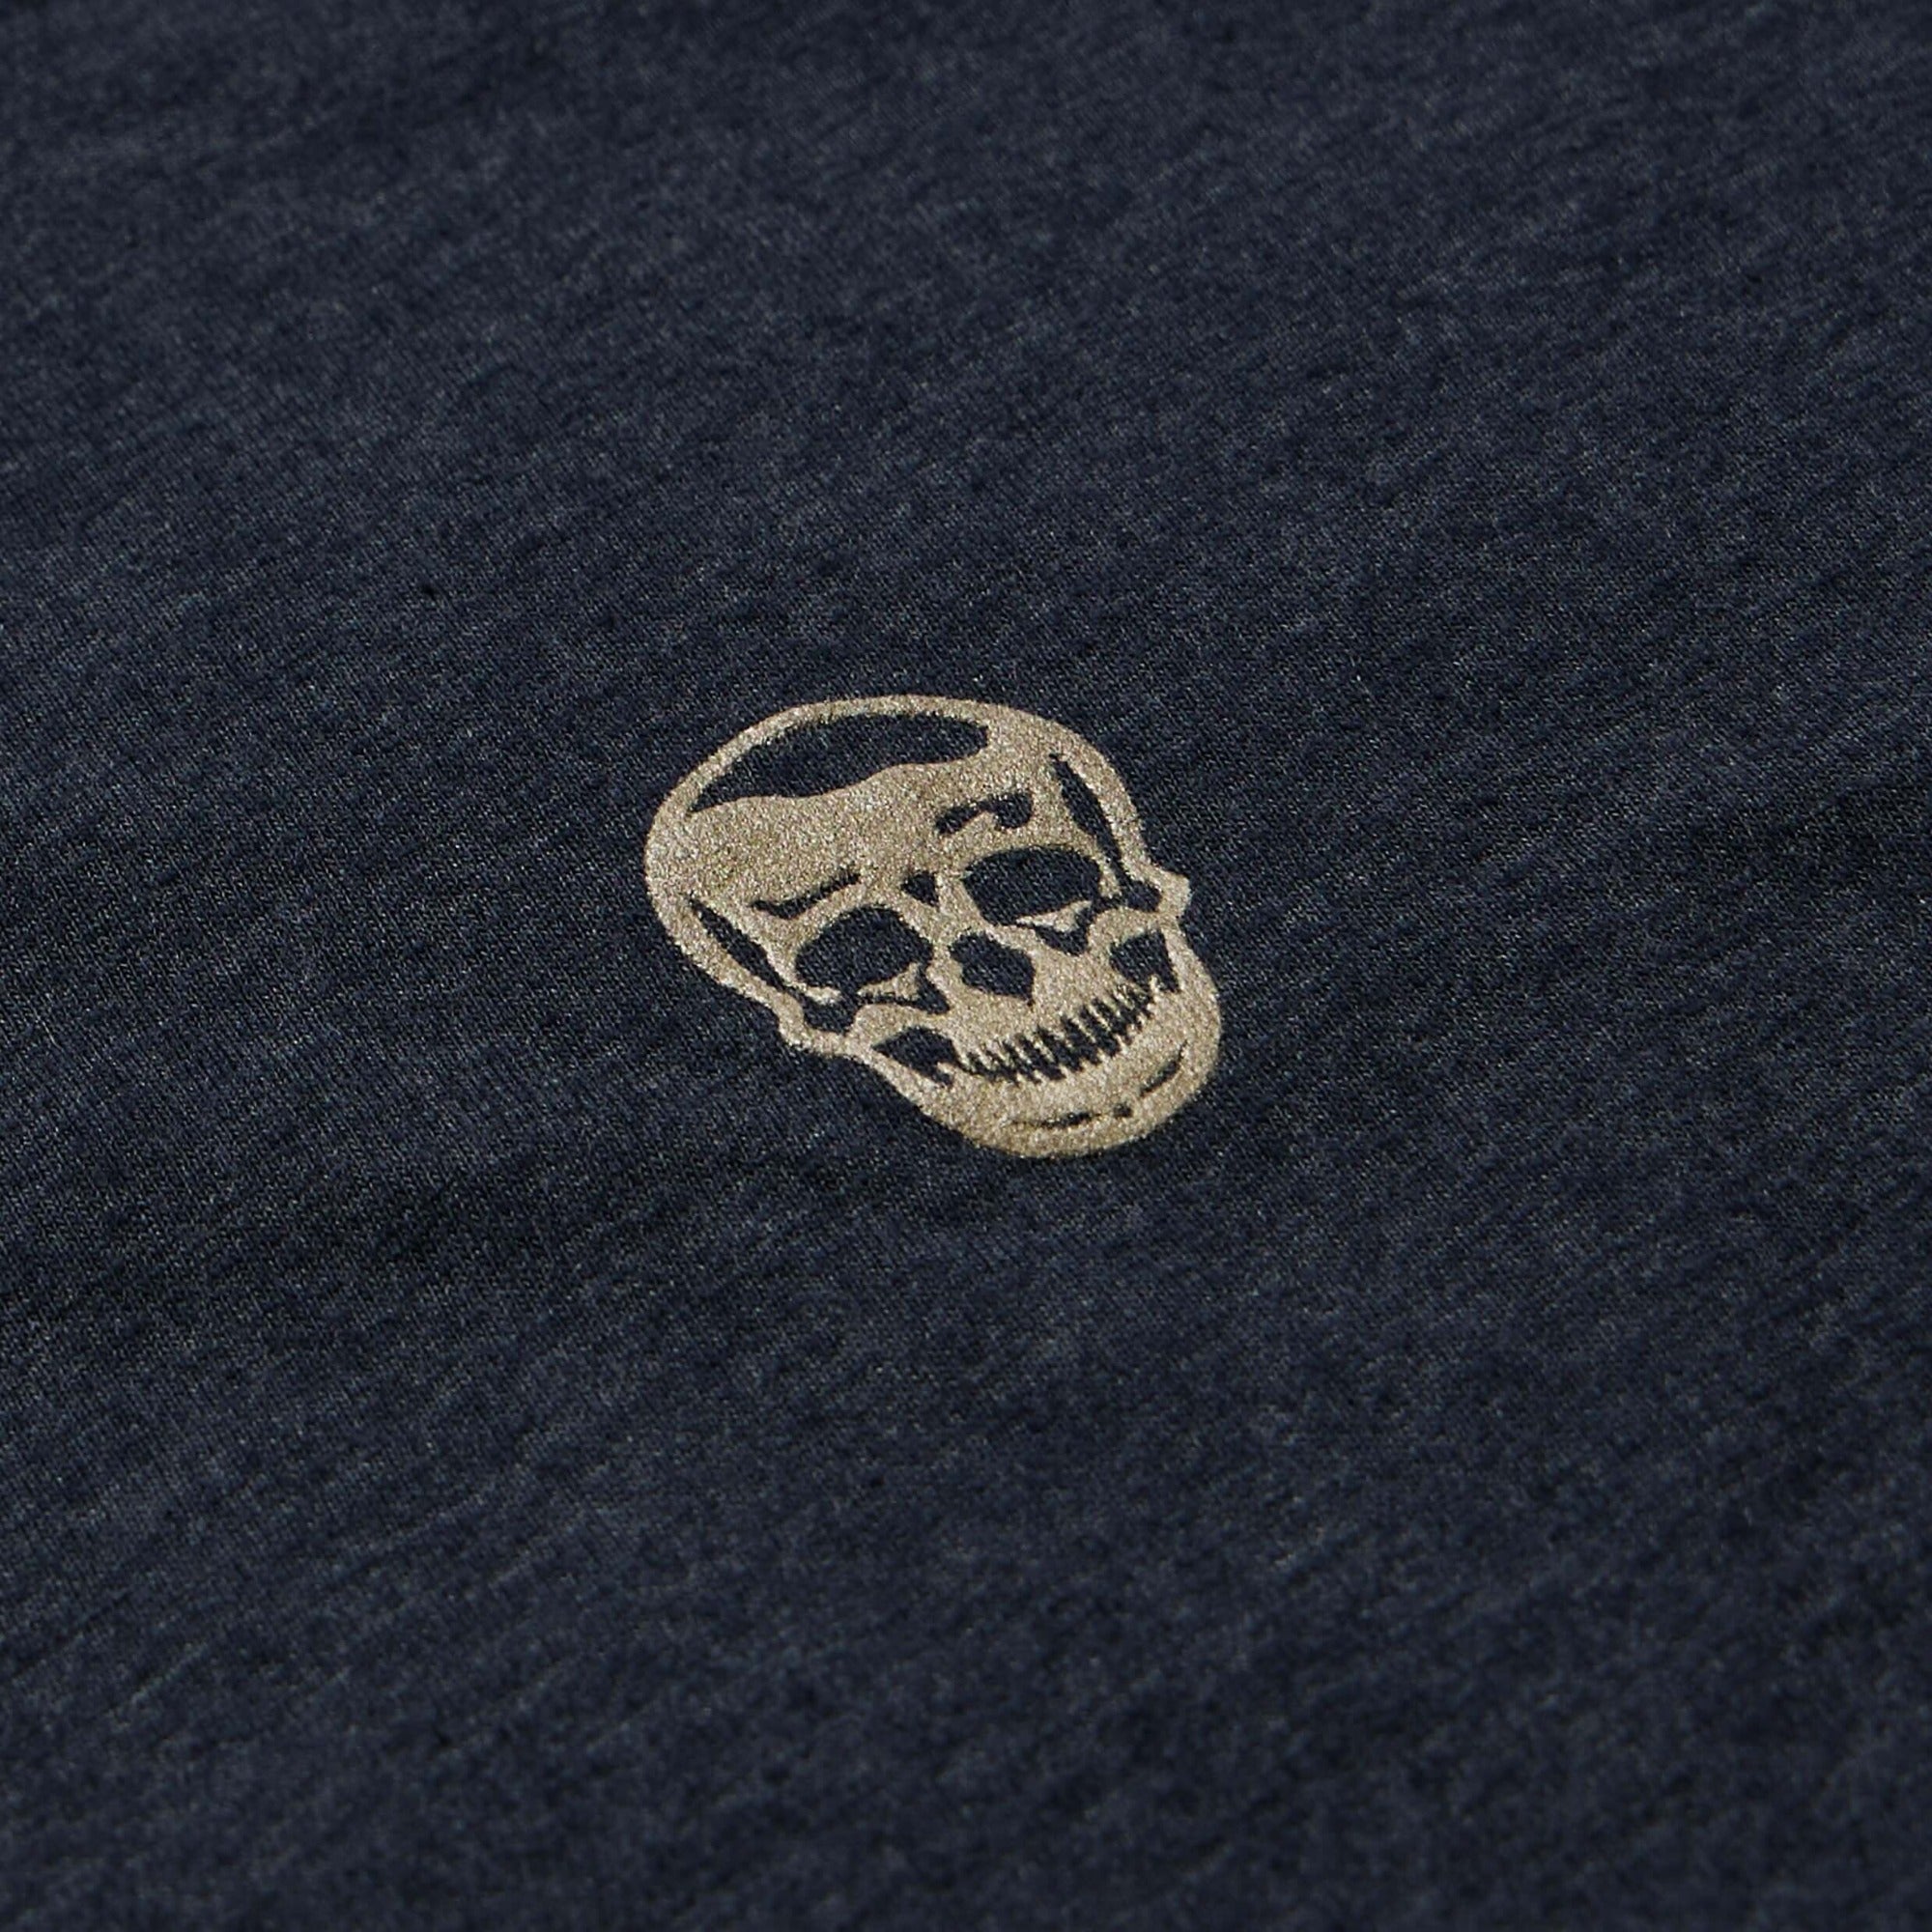 core shirt skull navy gold detail